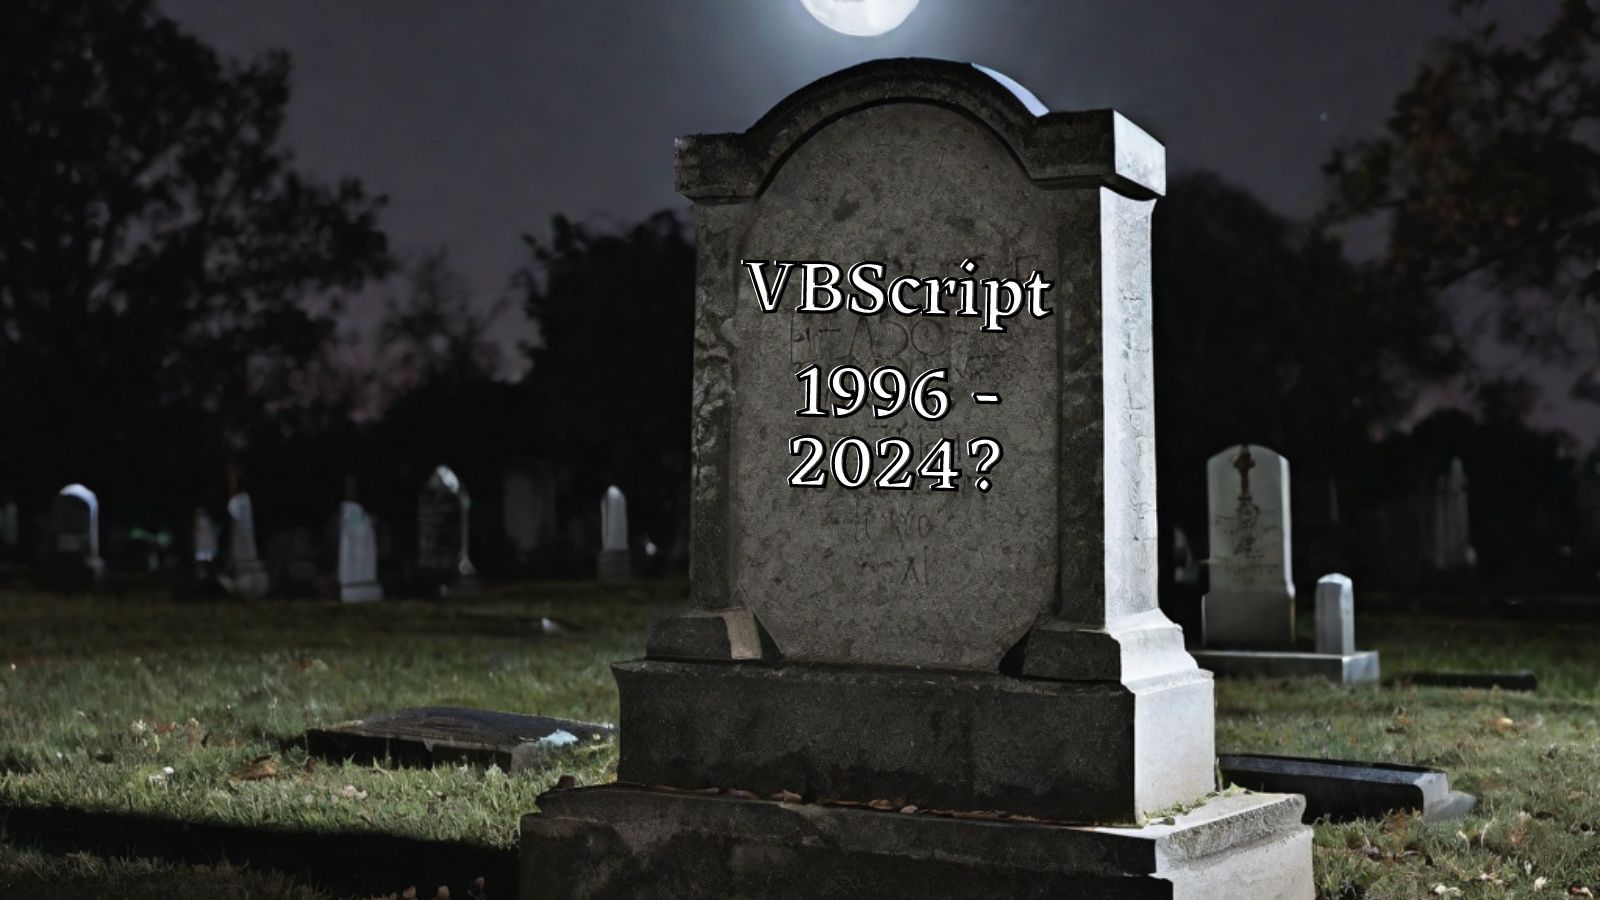 Microsoft Announces the Death of VBScript